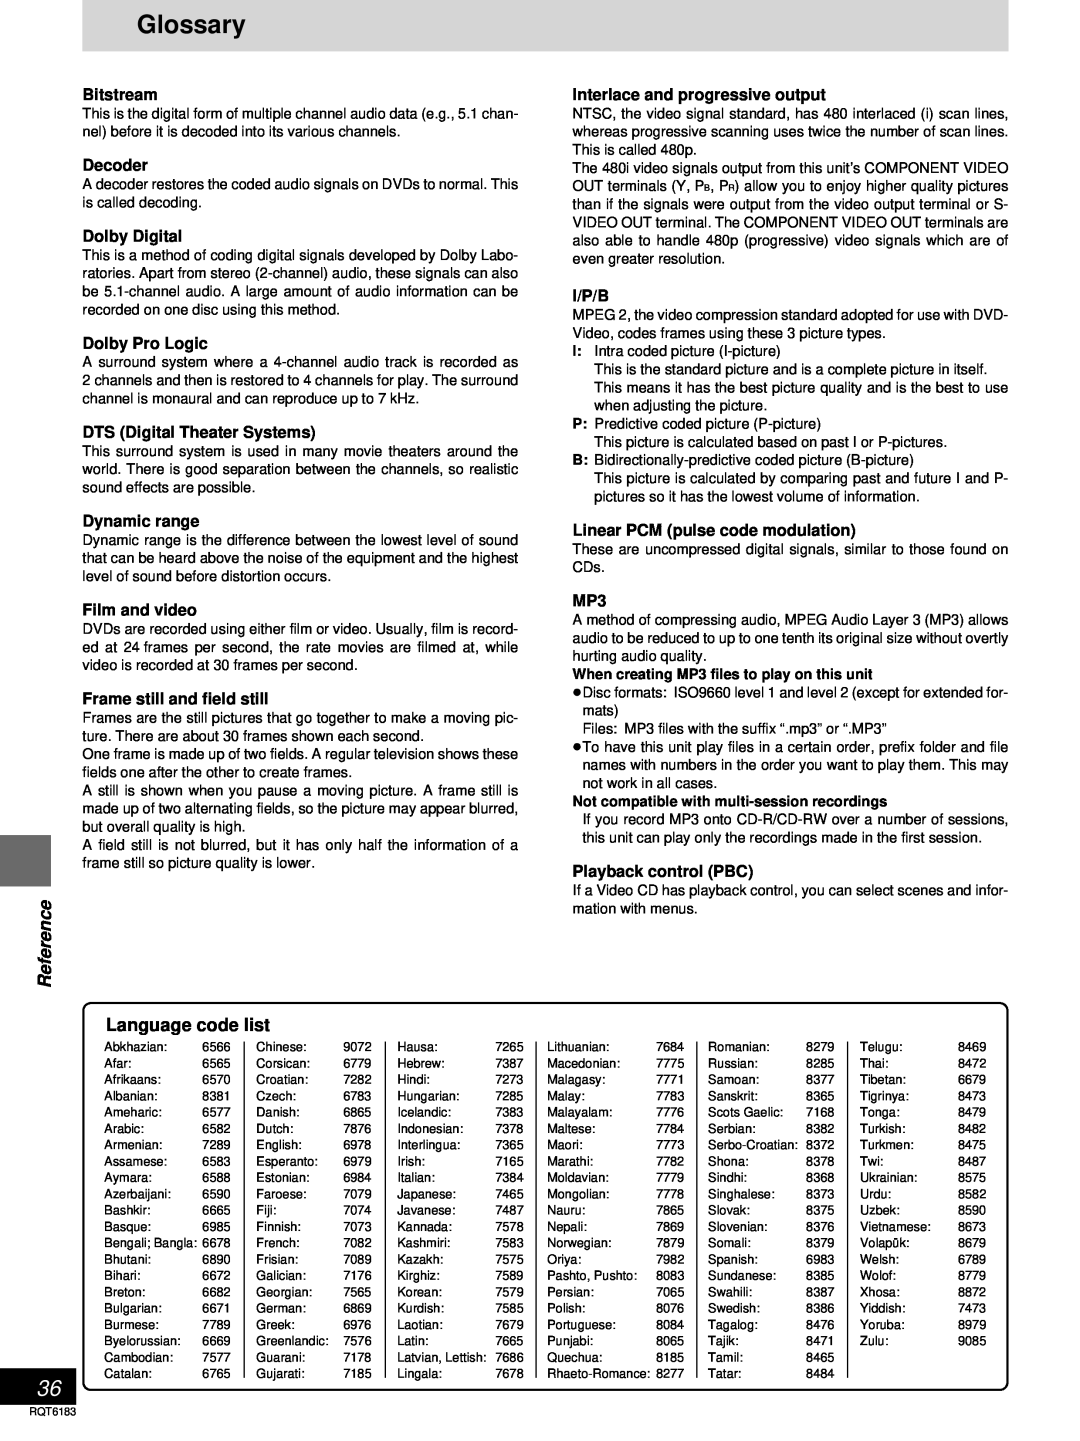 Panasonic SC-HT95 warranty Glossary, Reference, Language code list 